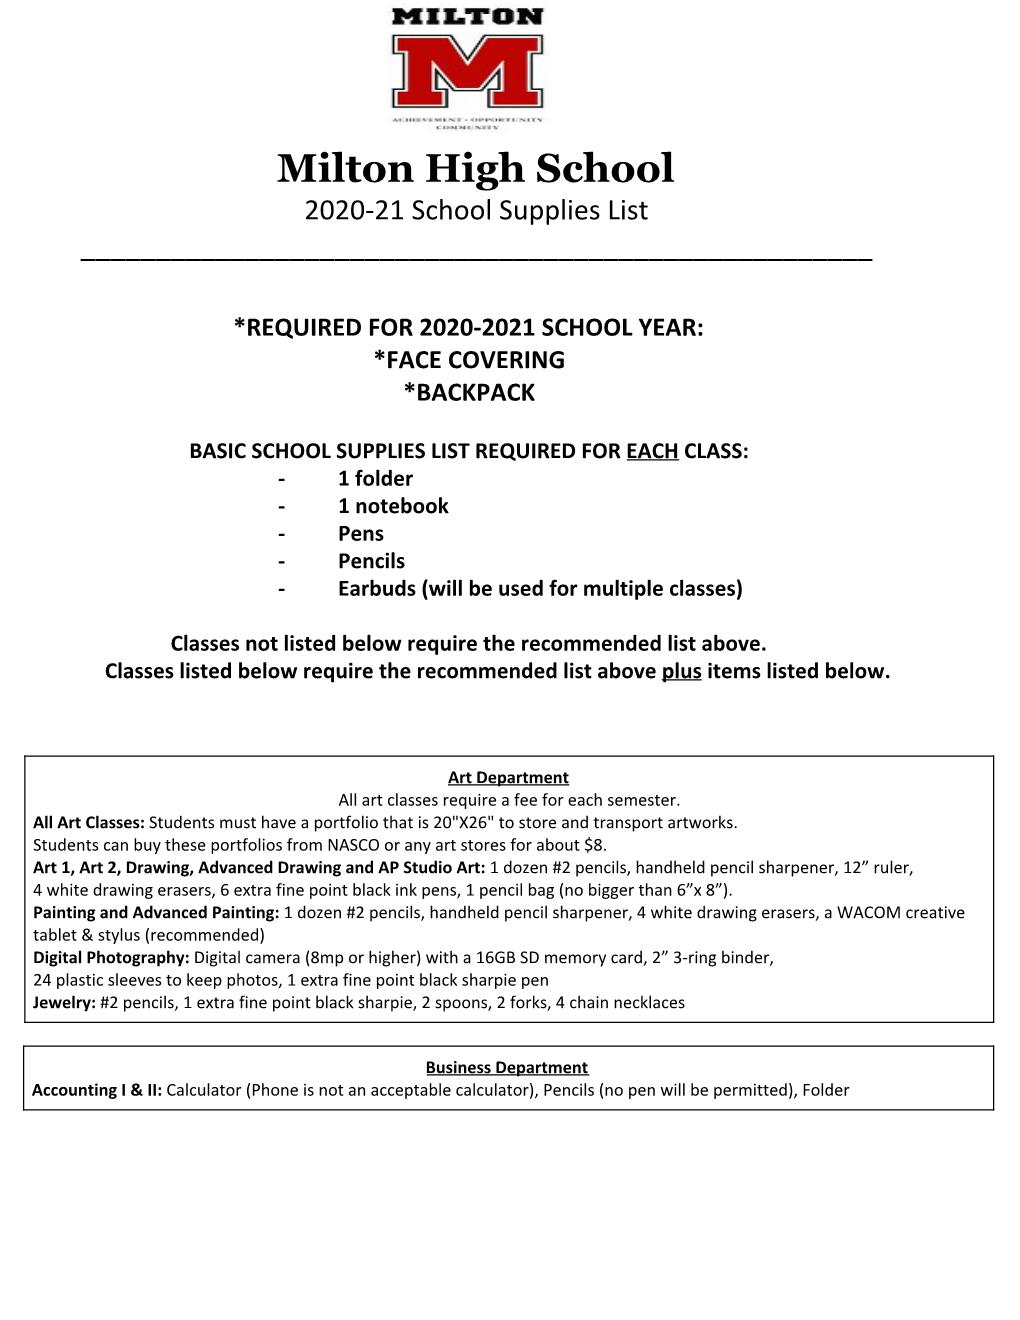 Milton High School Supplies List